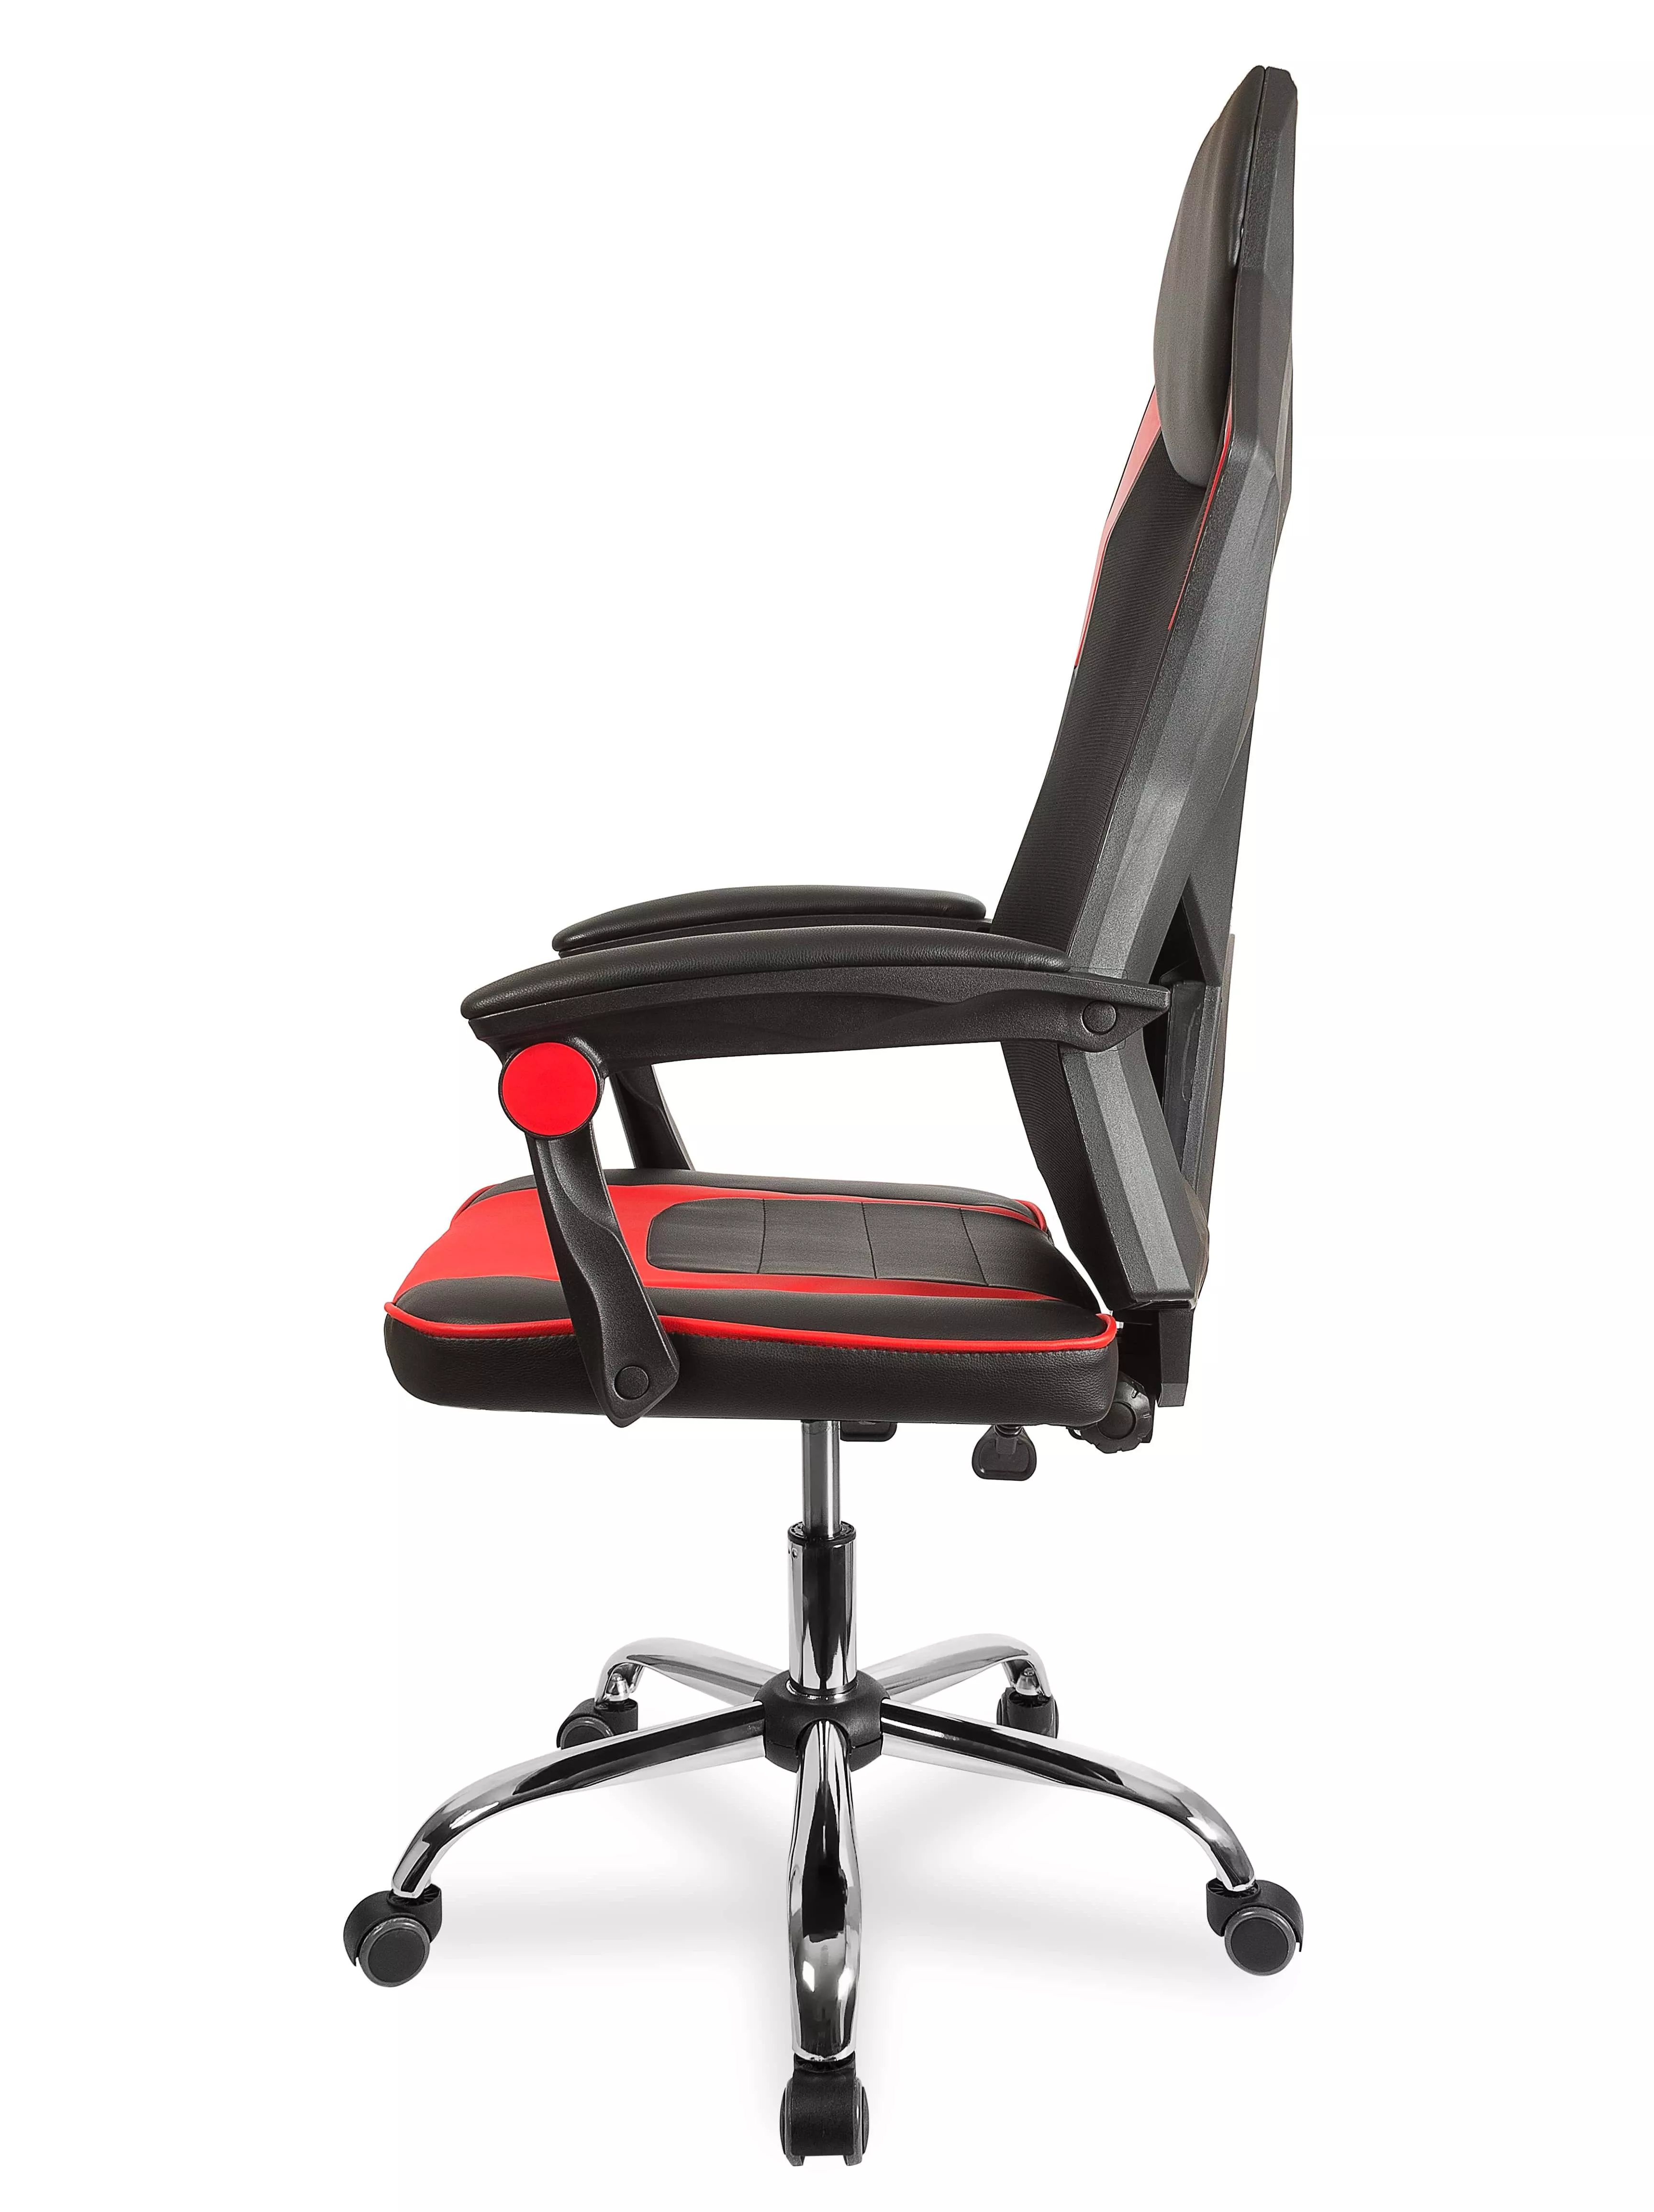 Геймерское кресло College CLG-802 LXH Red